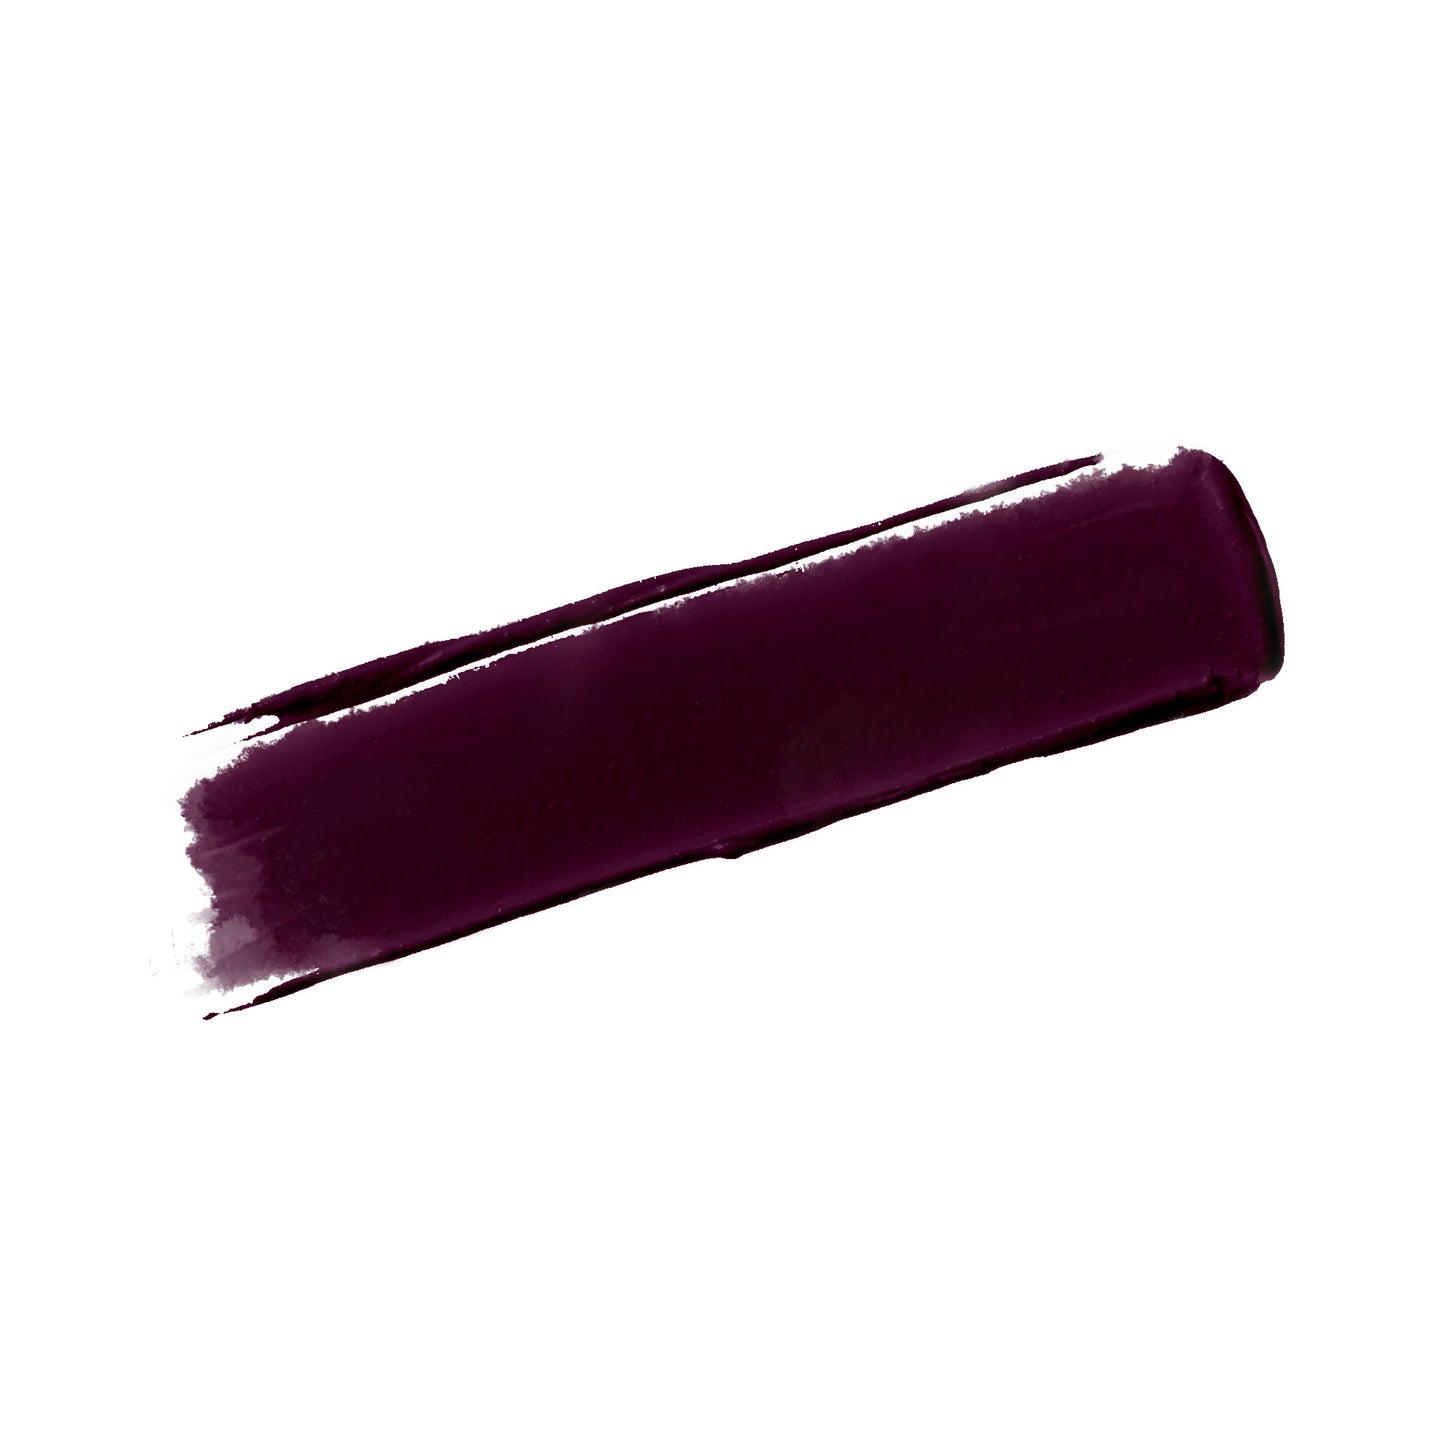 NXTE NXTEssence Black Berry Liquid Lip Stick Color Swatch